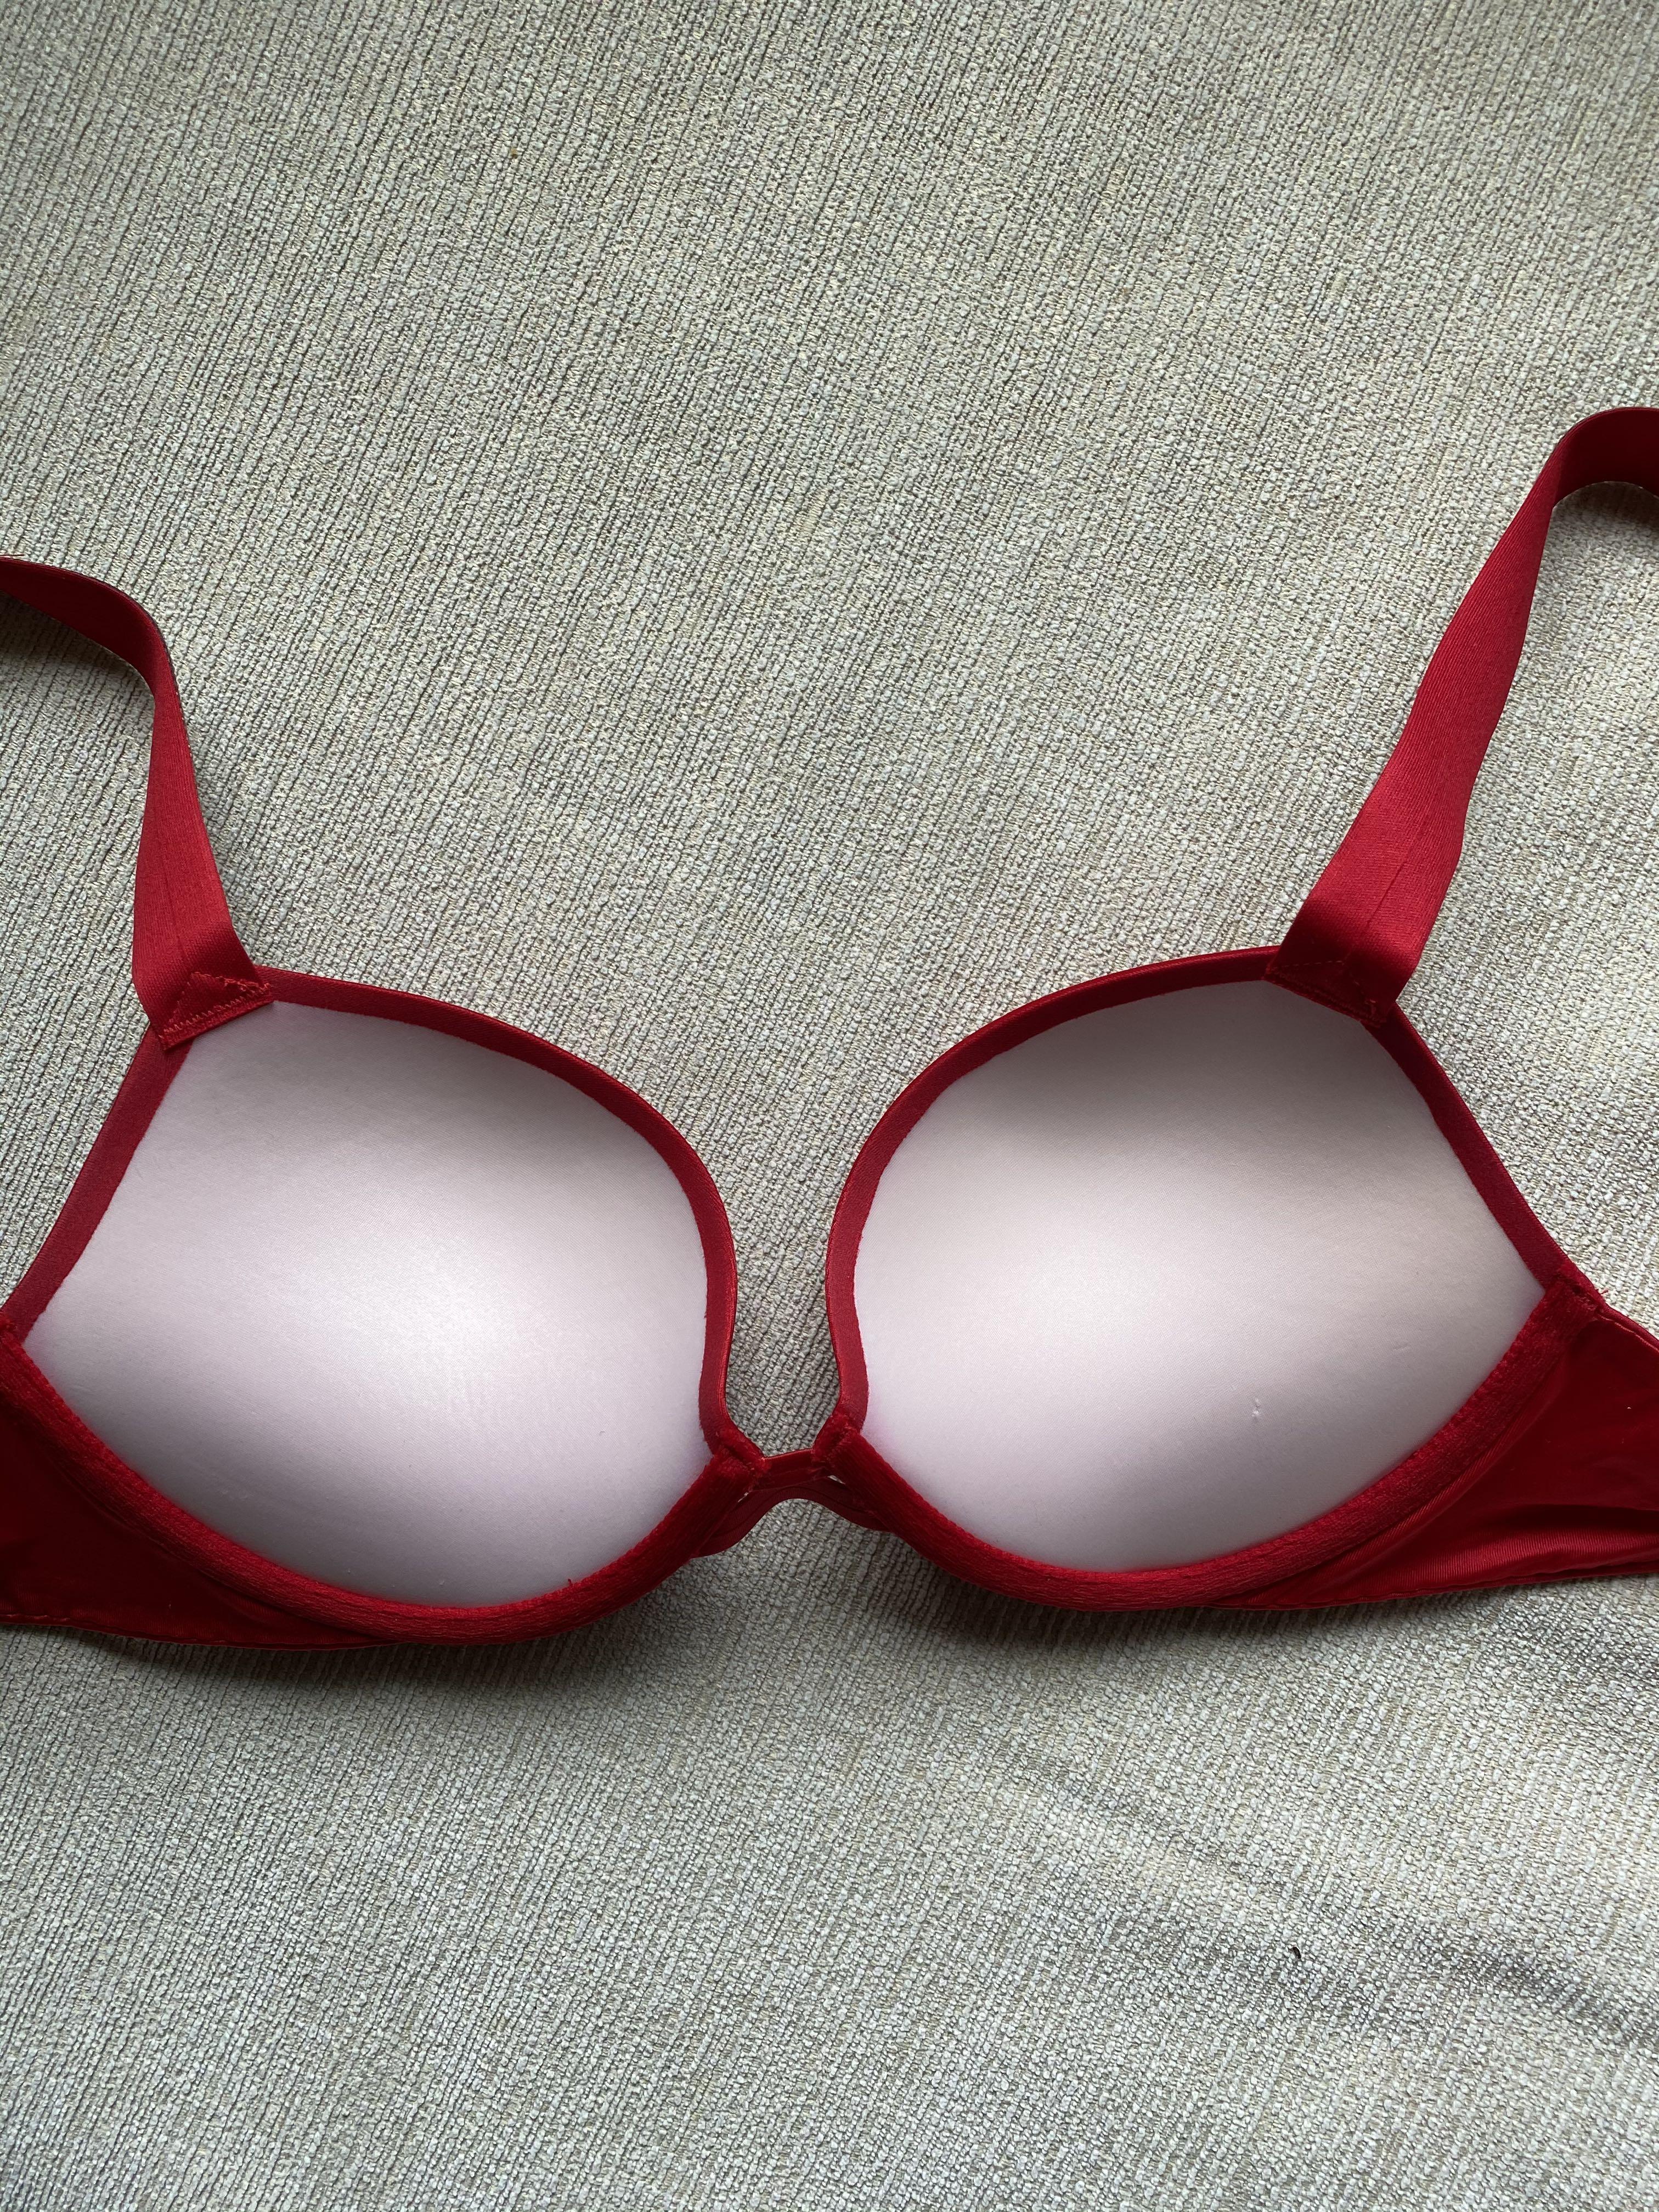 Victoria secret bra with rhinestone. 32B, Women's Fashion, New